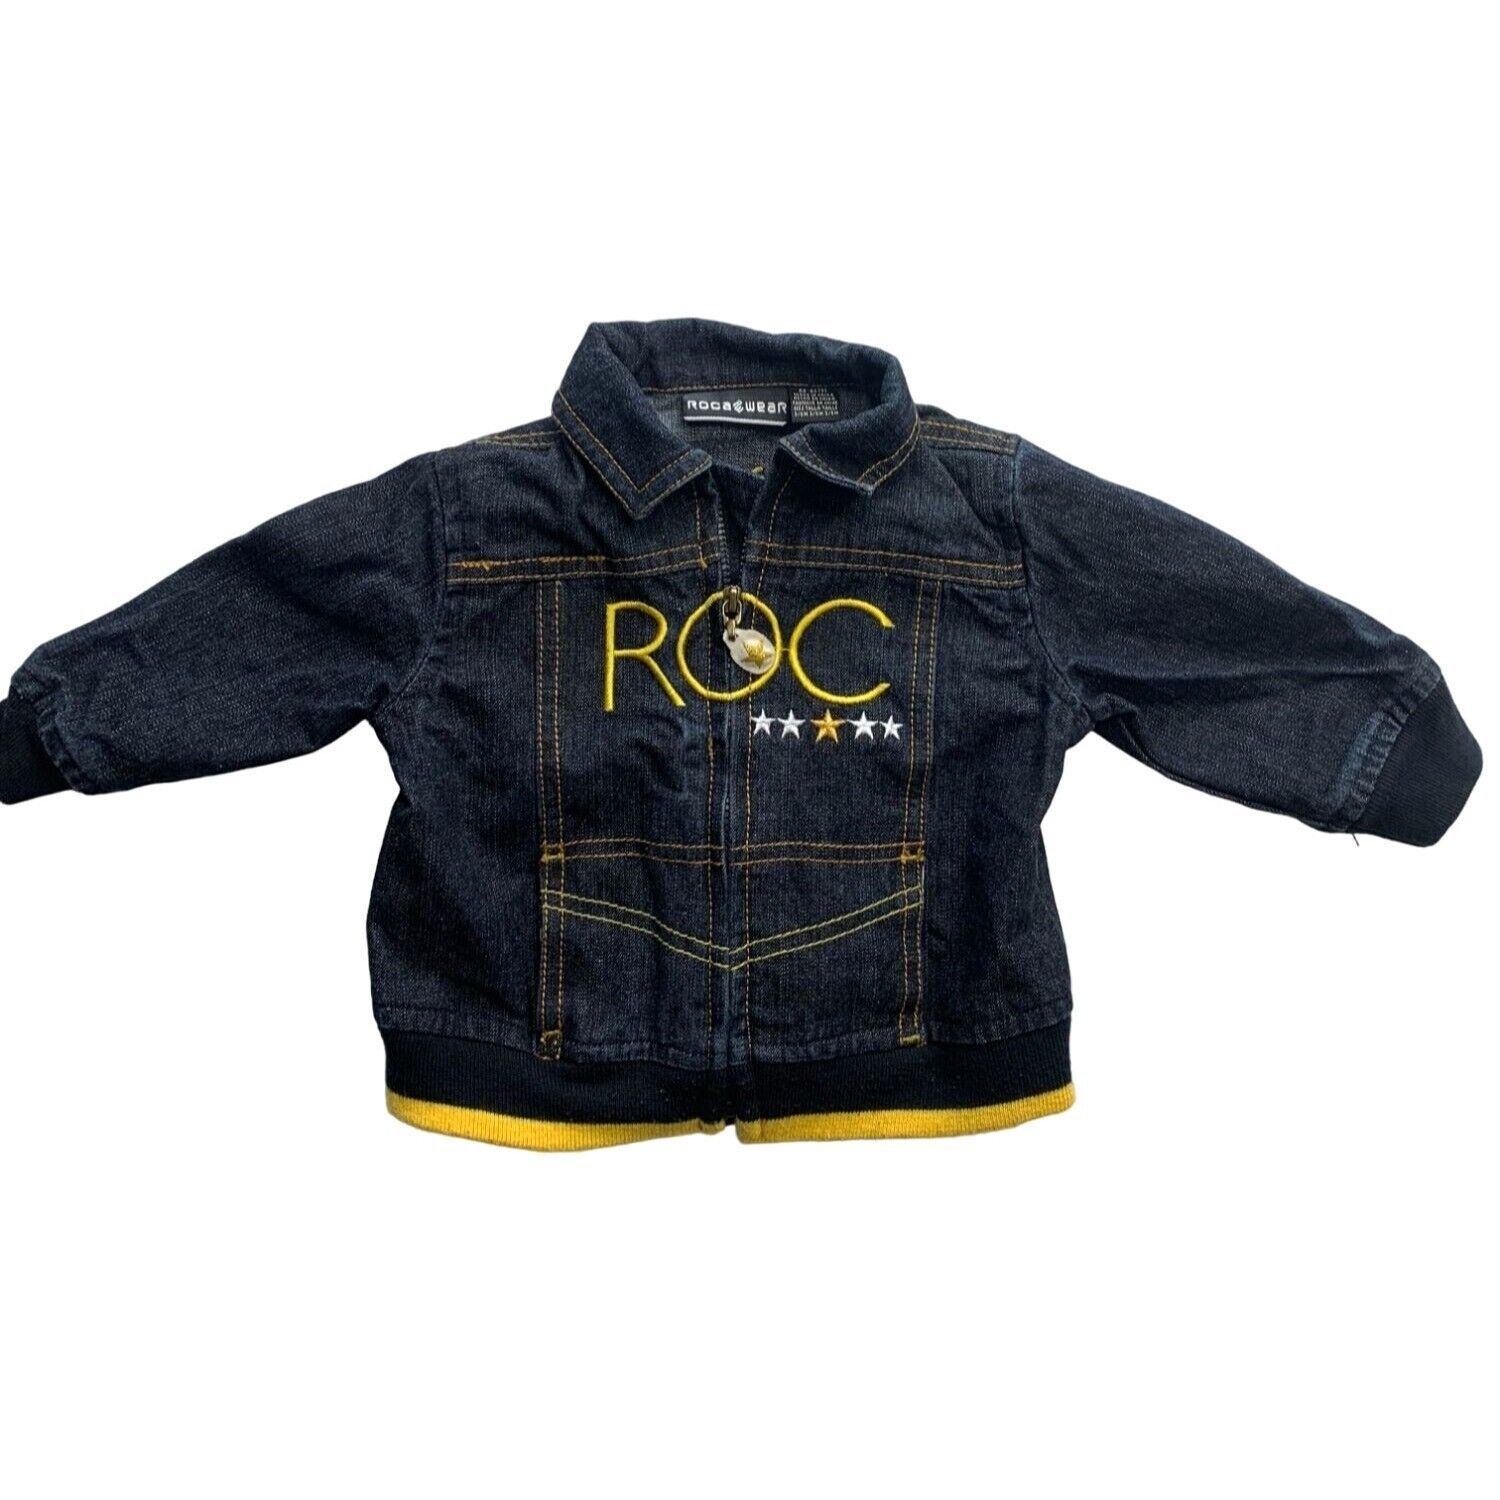 Primary image for Roca Wear Boys Infant Baby Size 3 6 Months Jean Jacket Denim Full Zip Coat